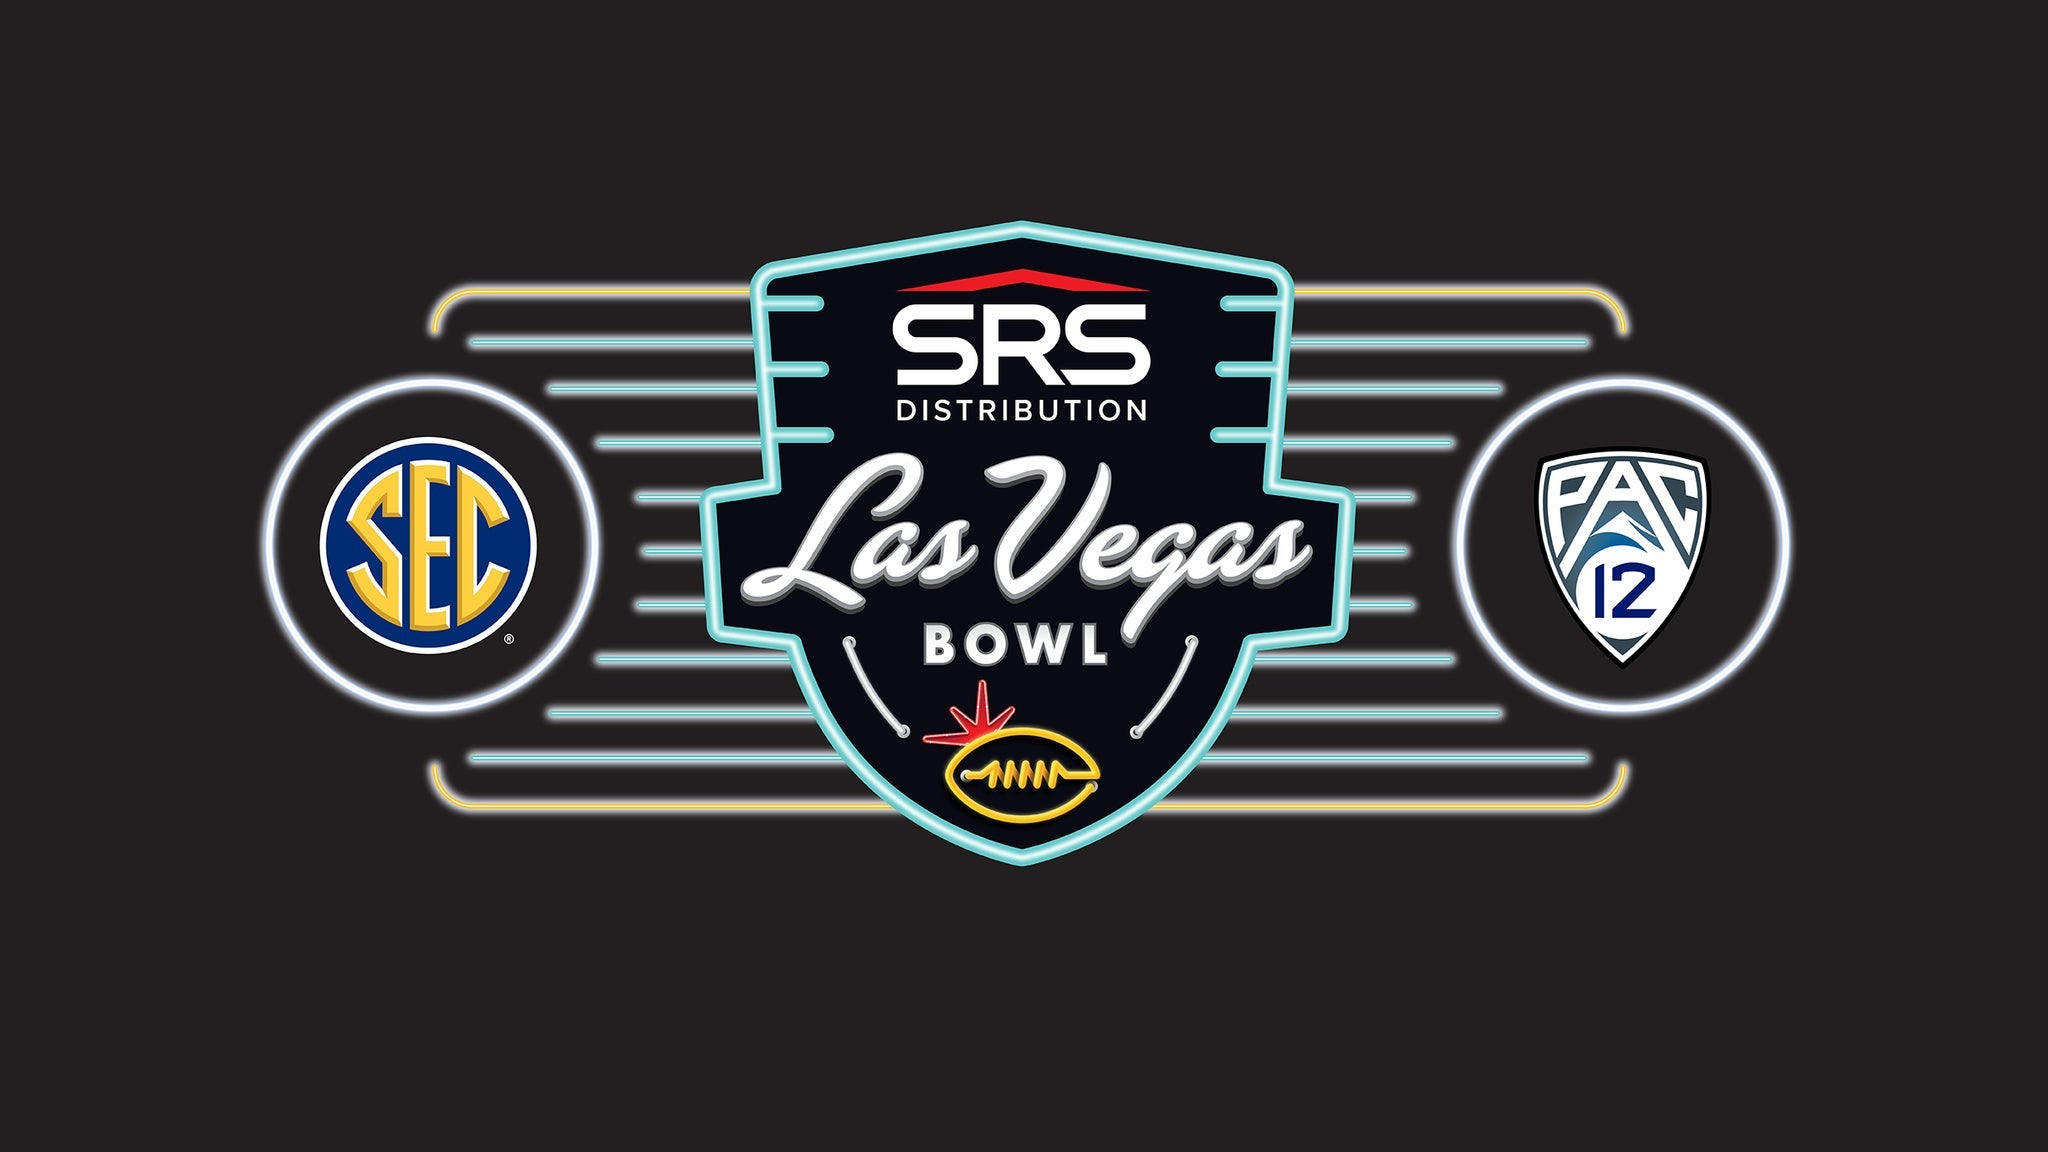 SRS Las Vegas Bowl 2022, Las Vegas